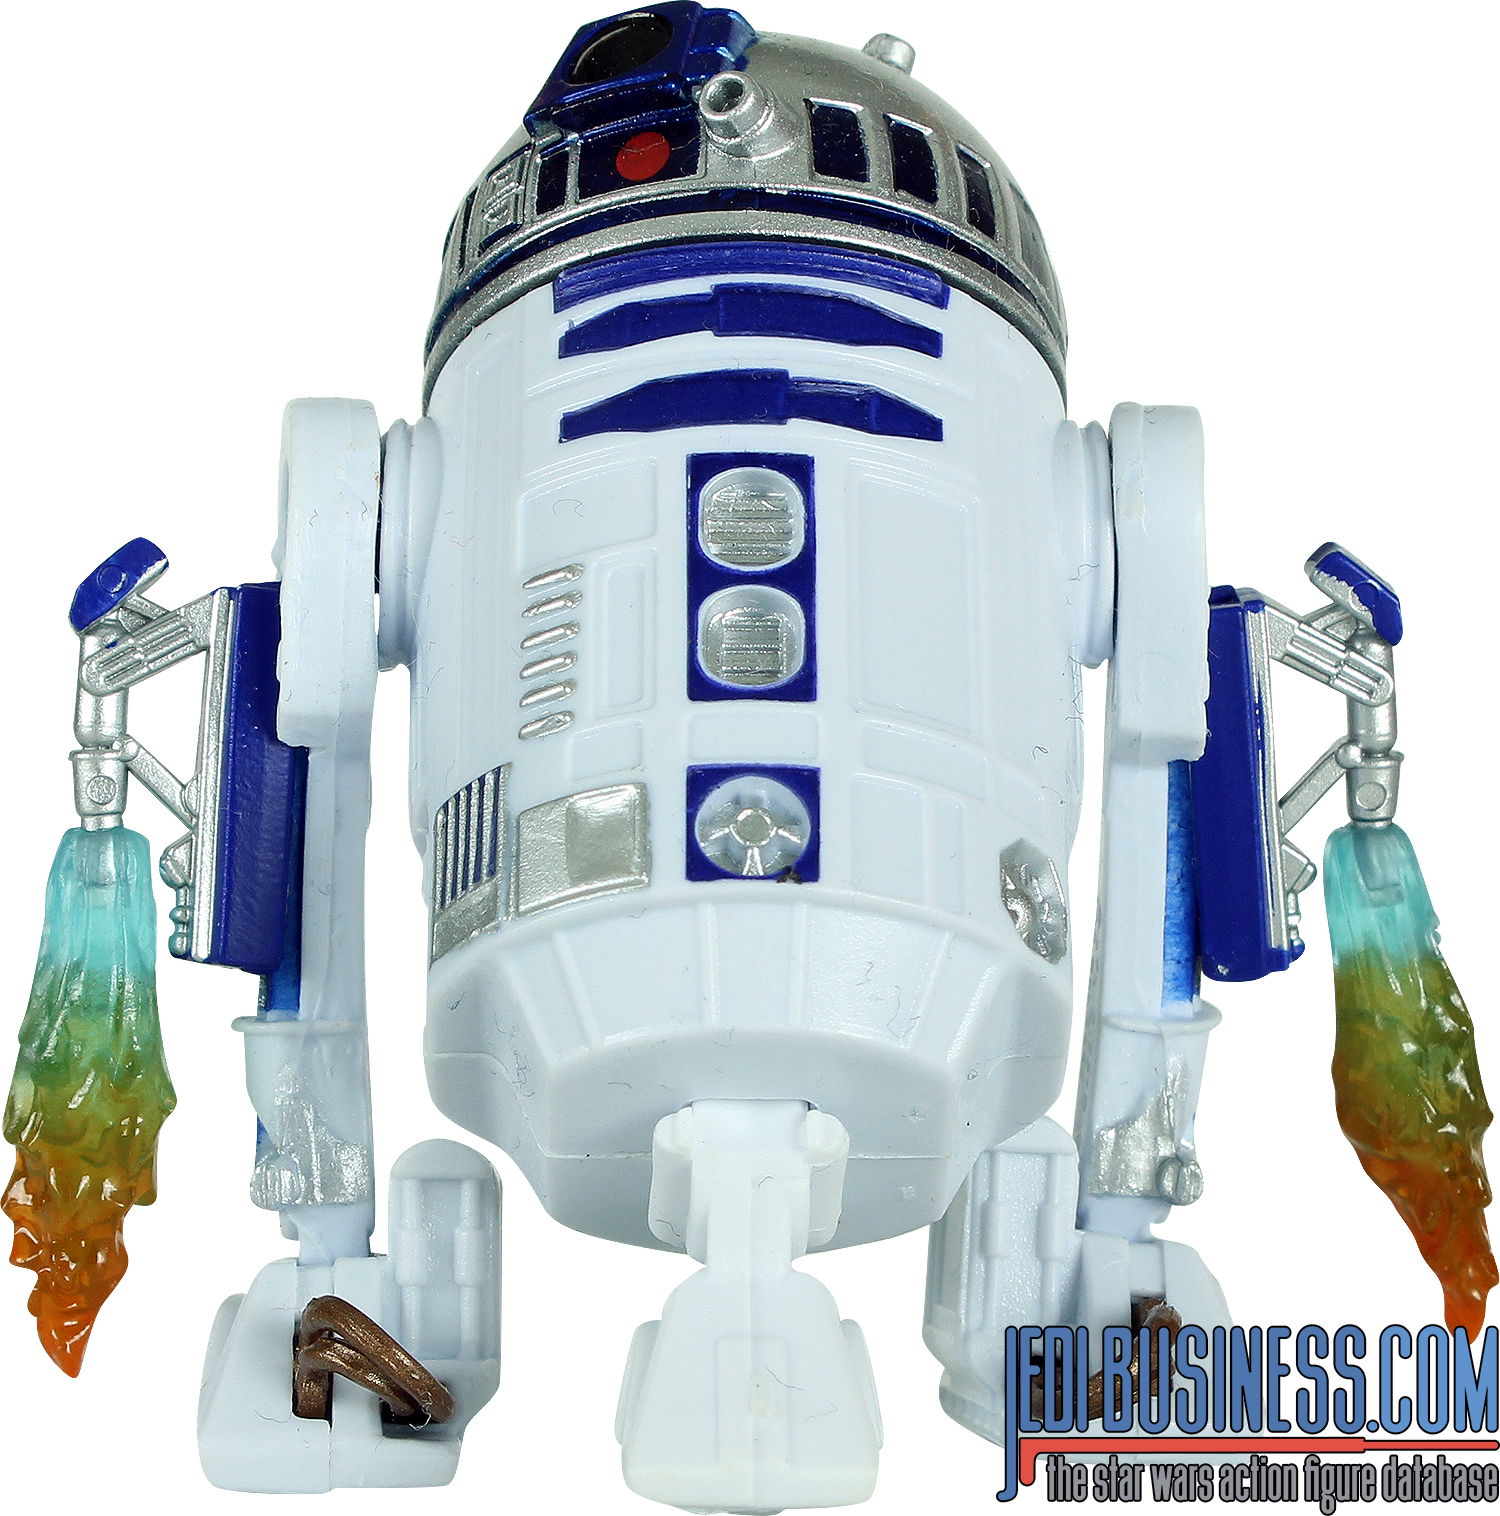 R2-D2 The Astromech